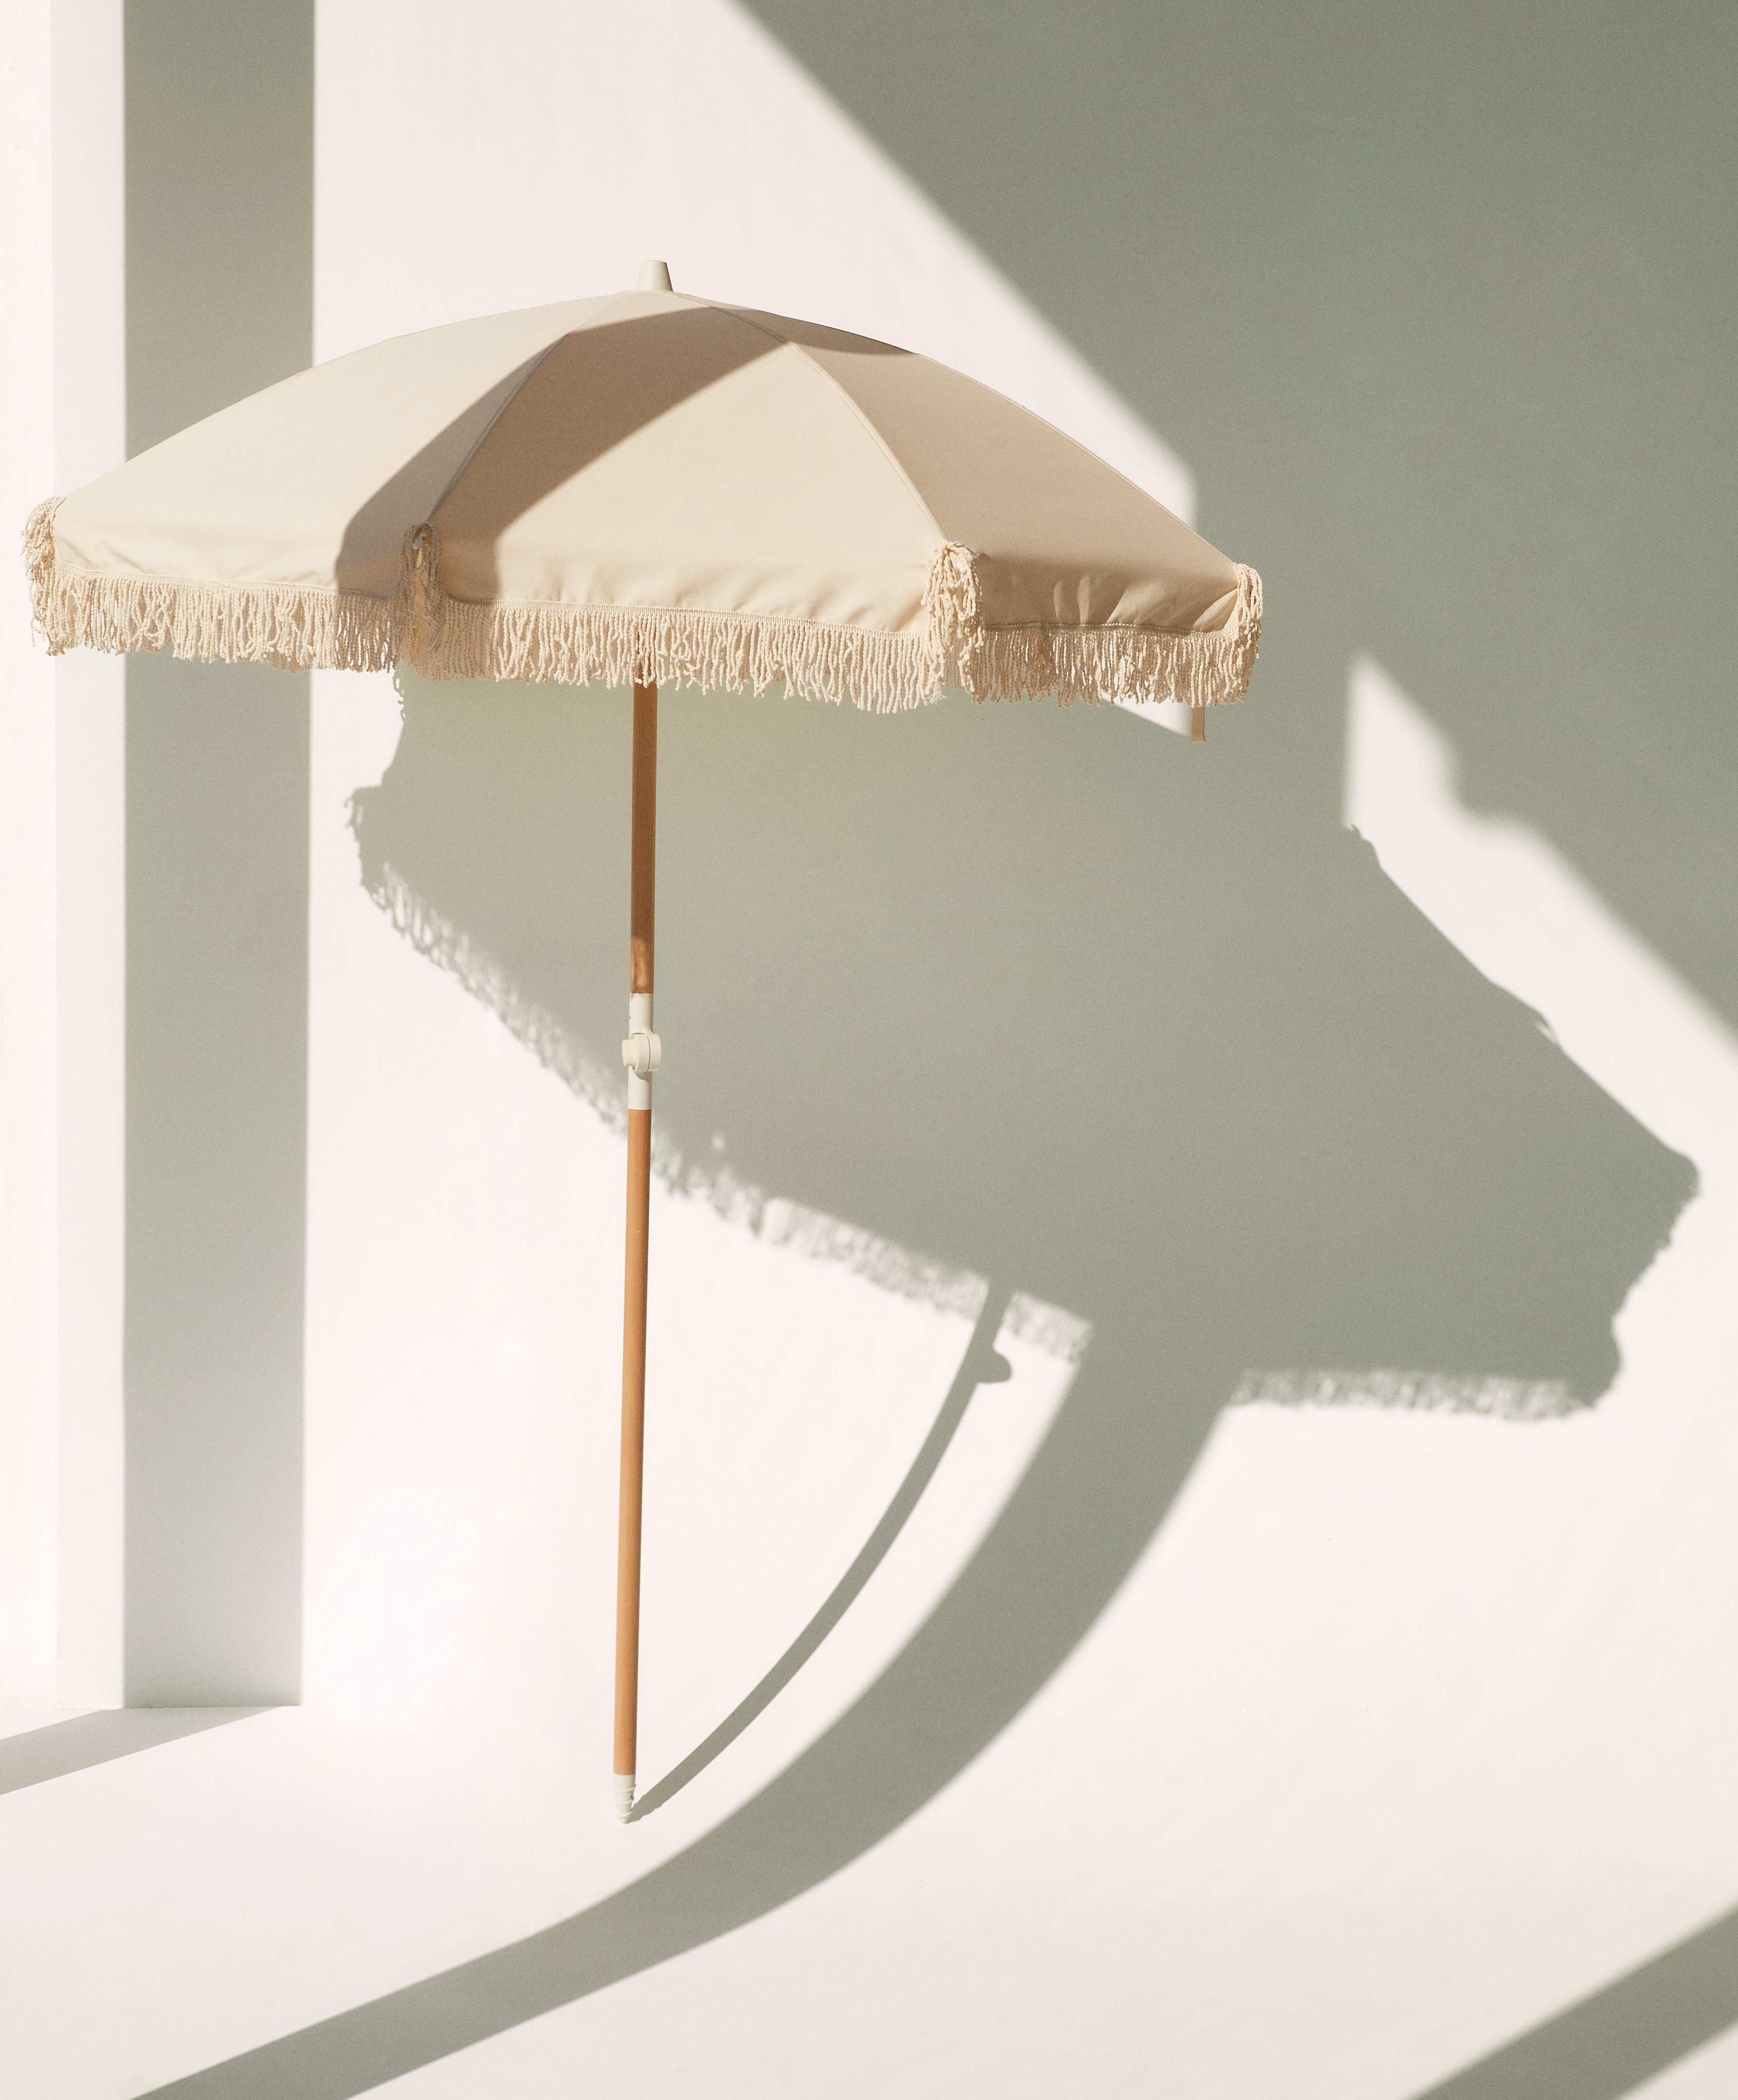 100% cotton fringed beach umbrella